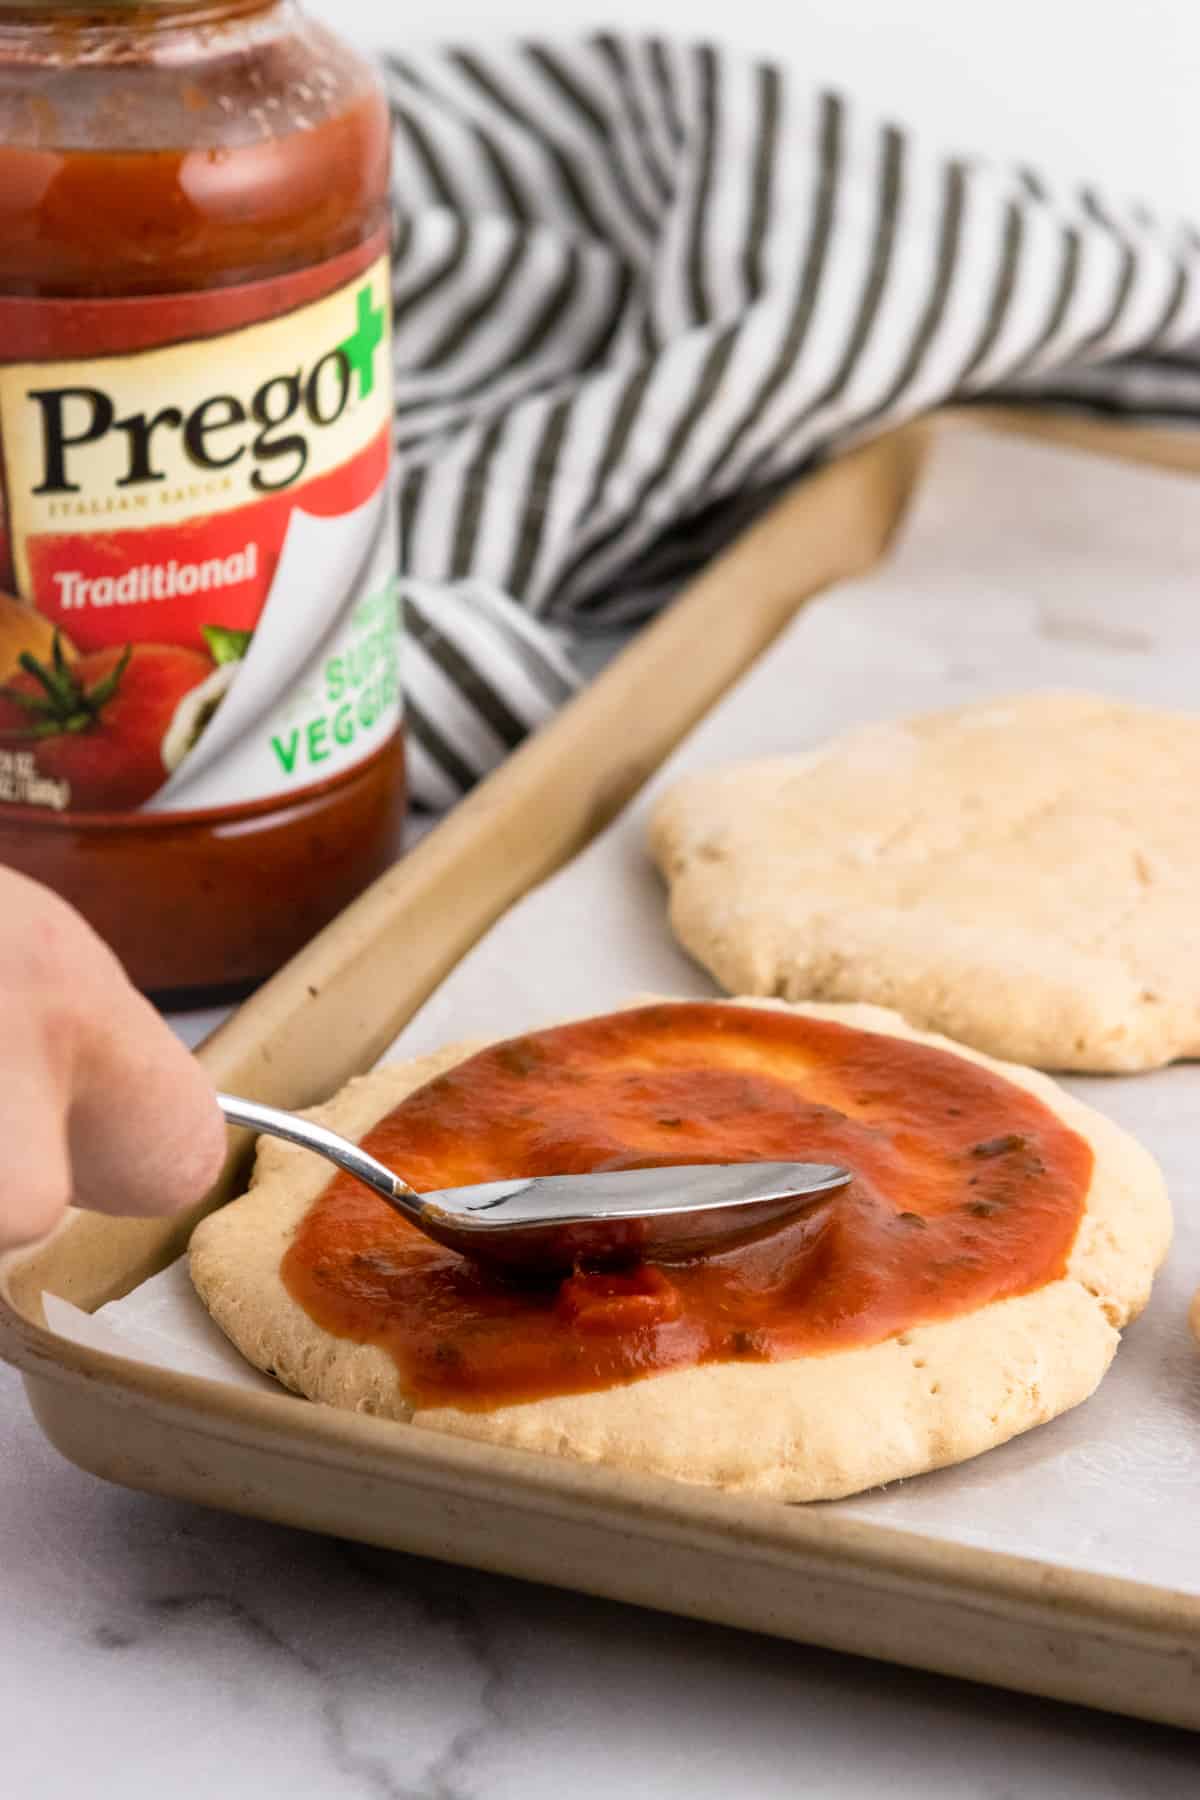 Sauce spread onto pizza dough.